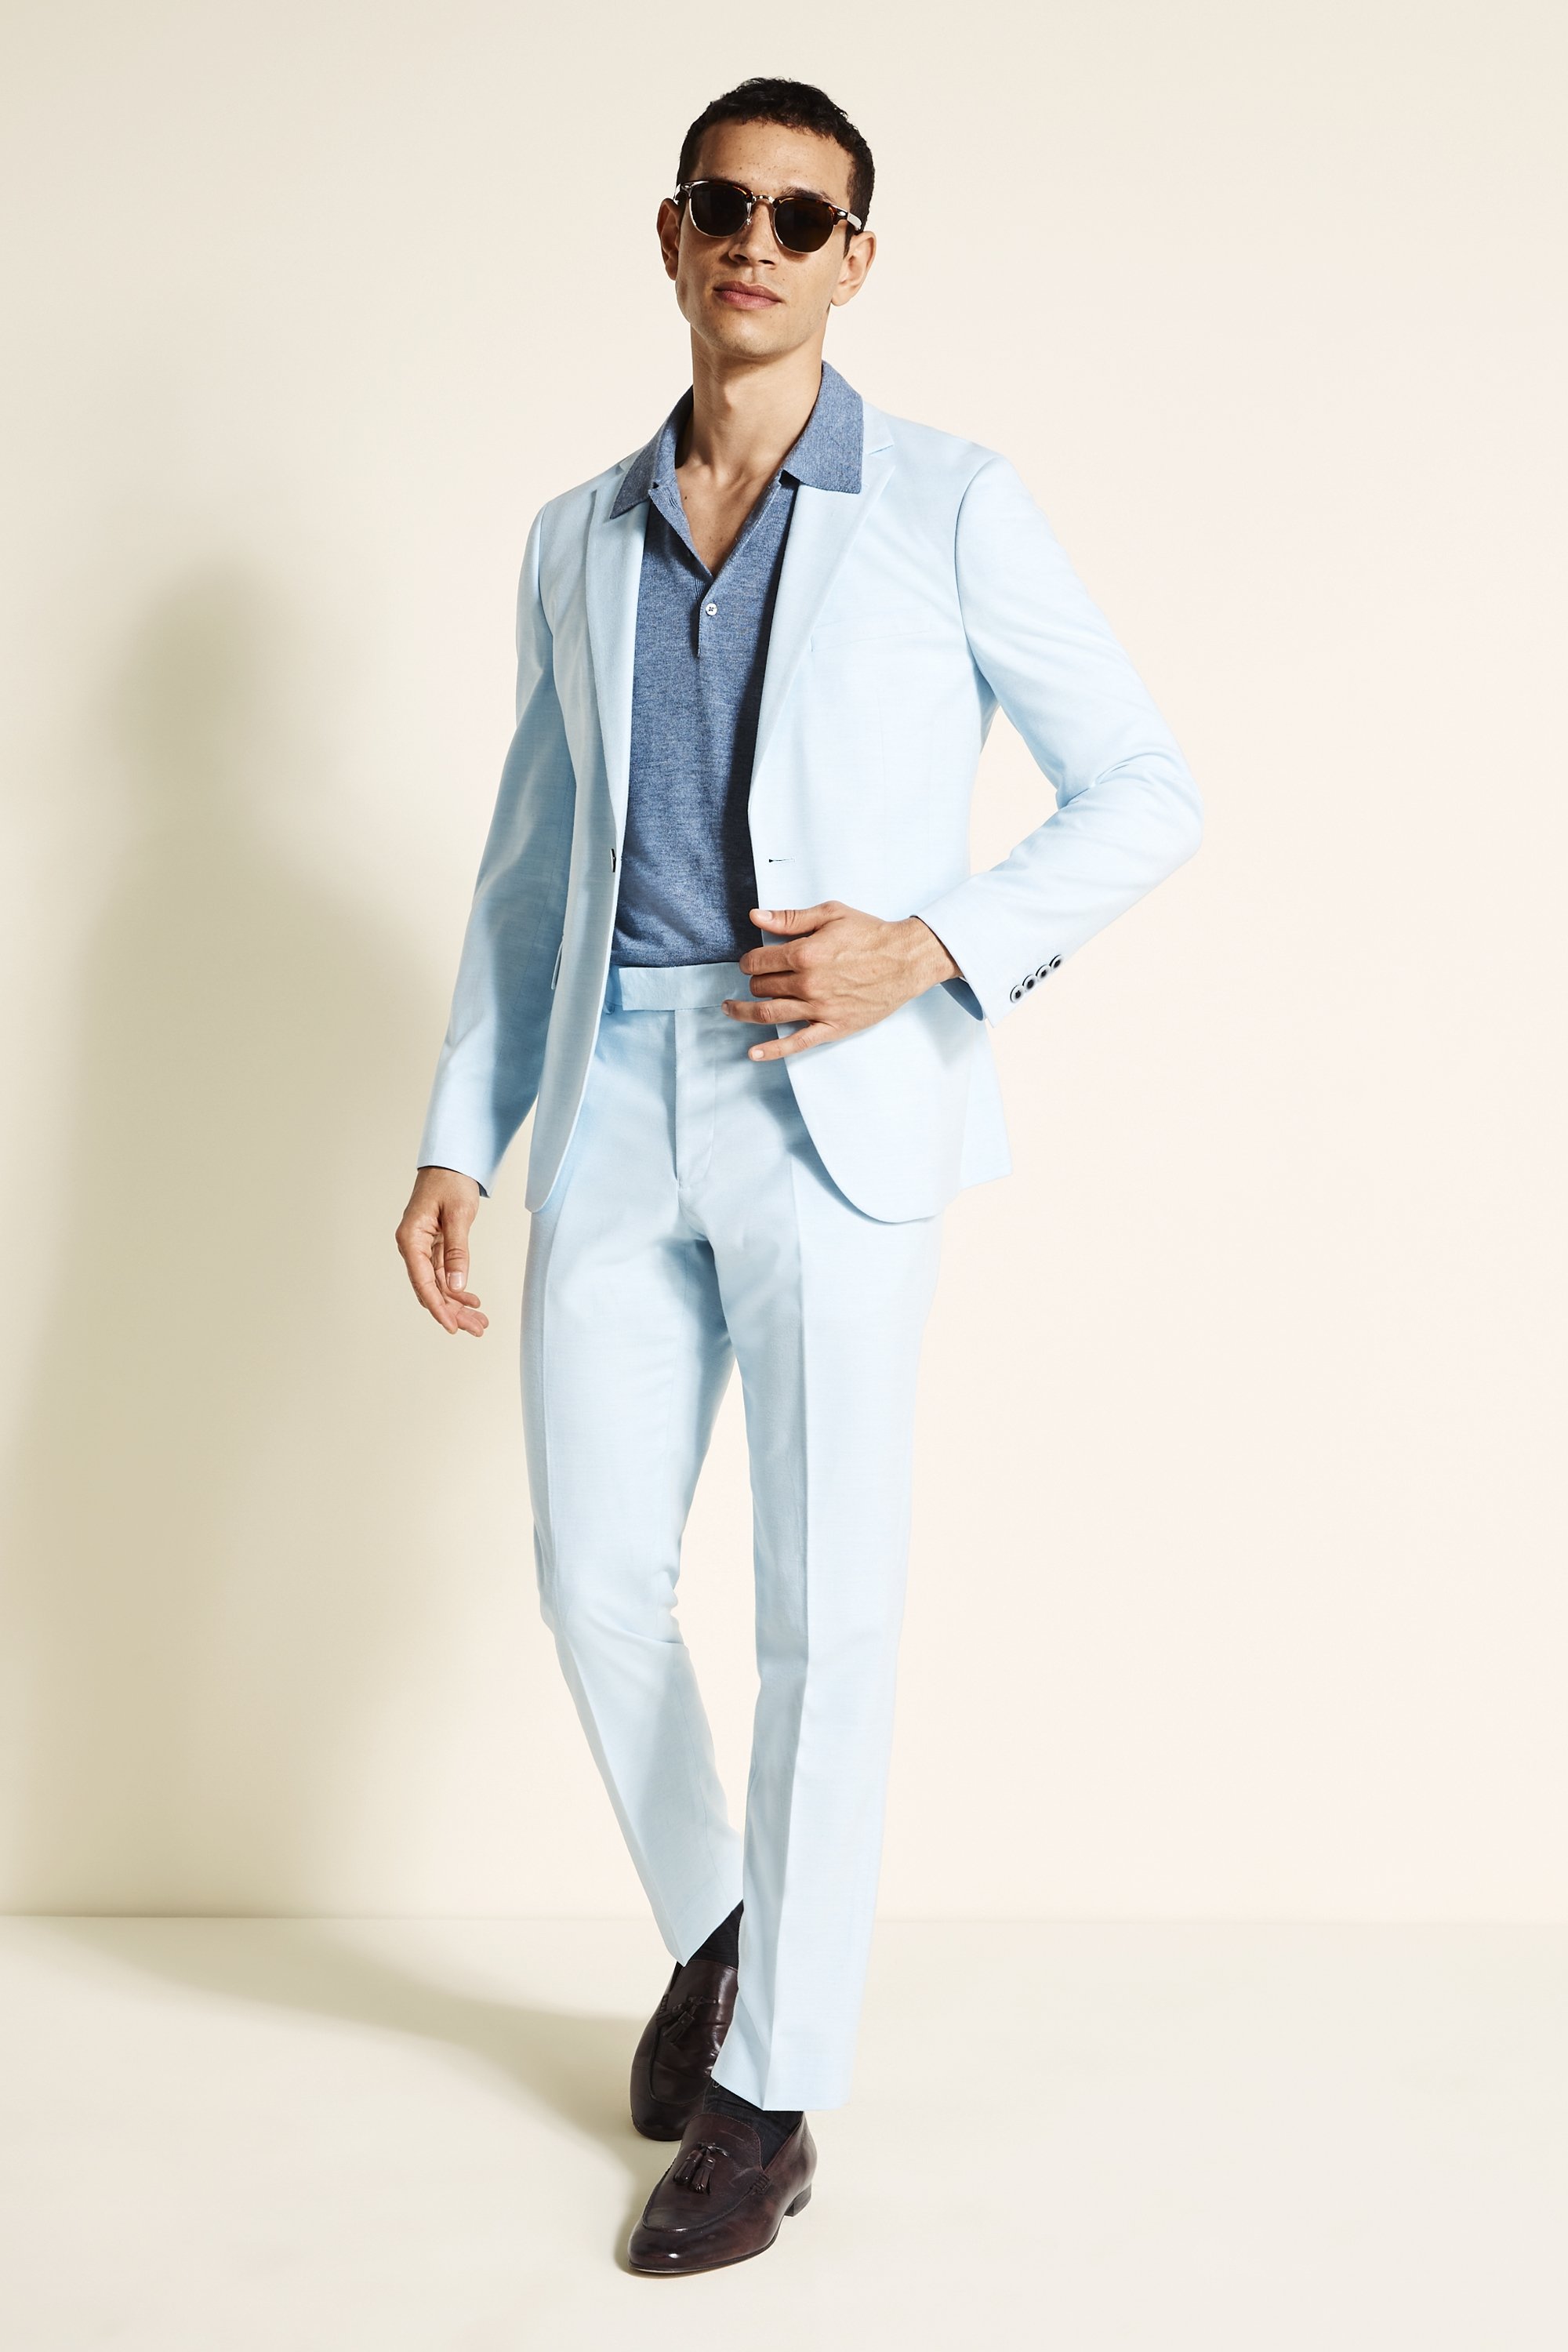 Slim Fit Sky Blue Jacket | Buy Online at Moss